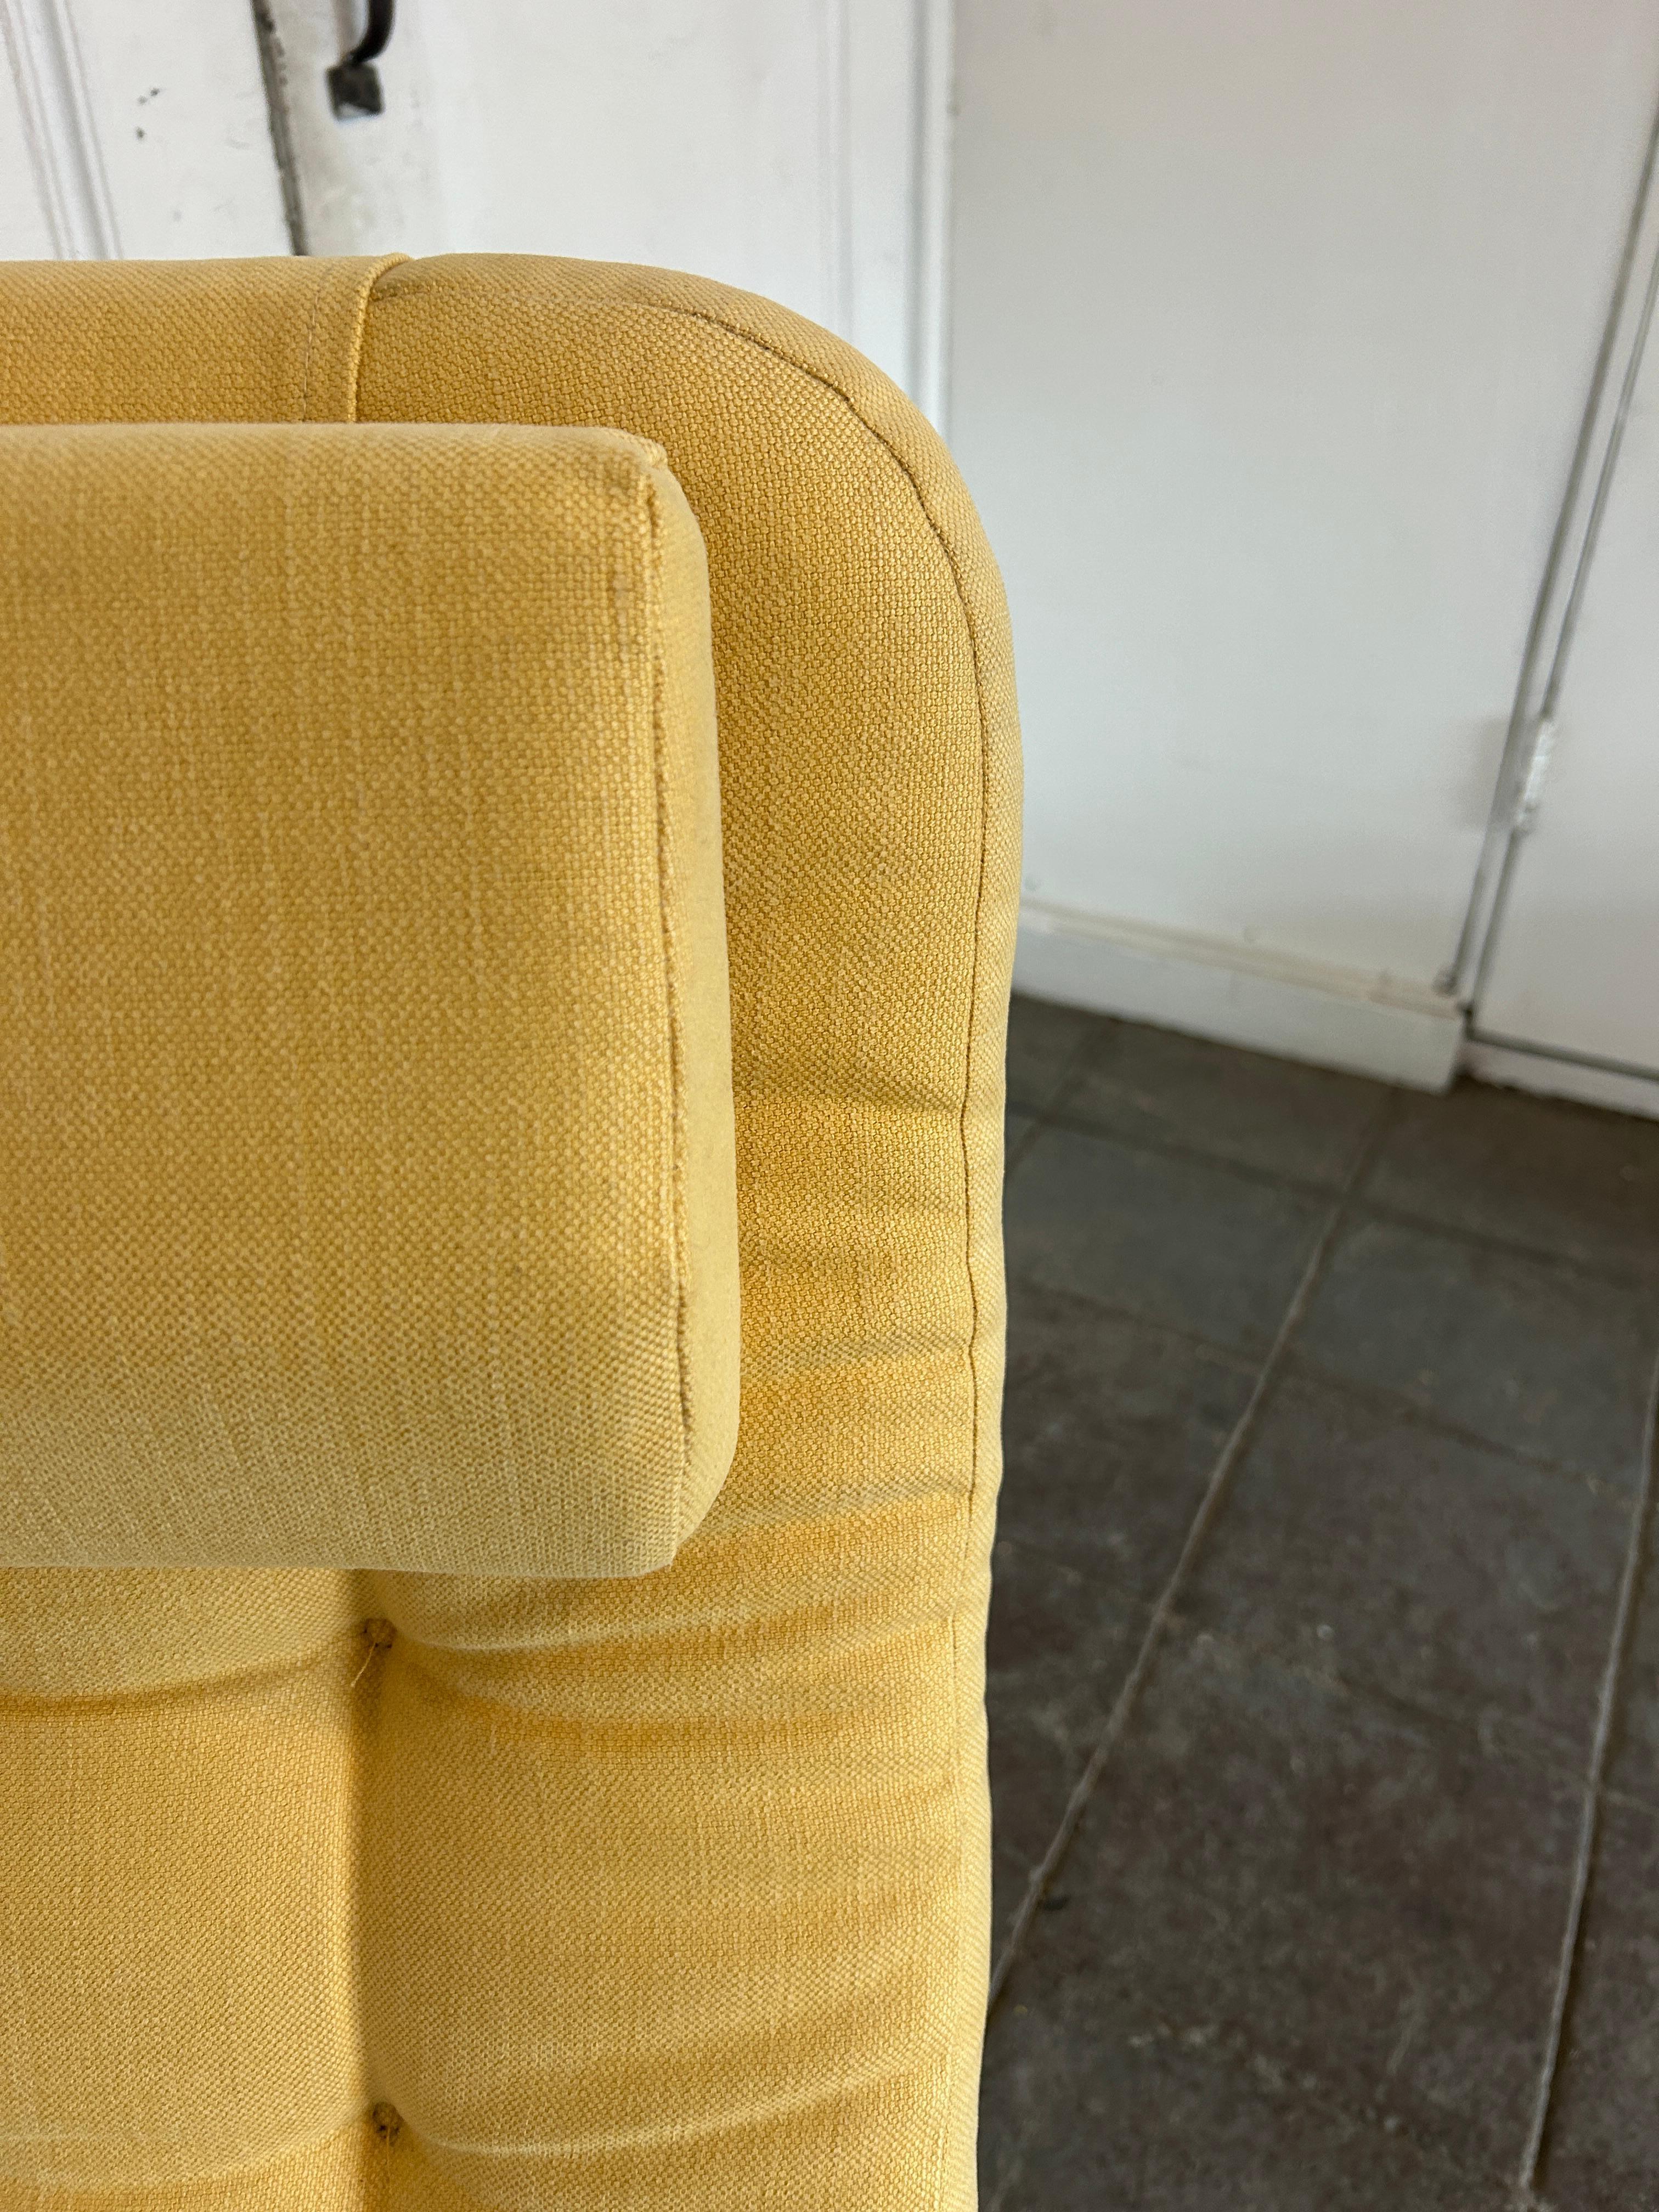 Norwegian Scandinavian modern teak leather safari lounge chair with ottoman yellow